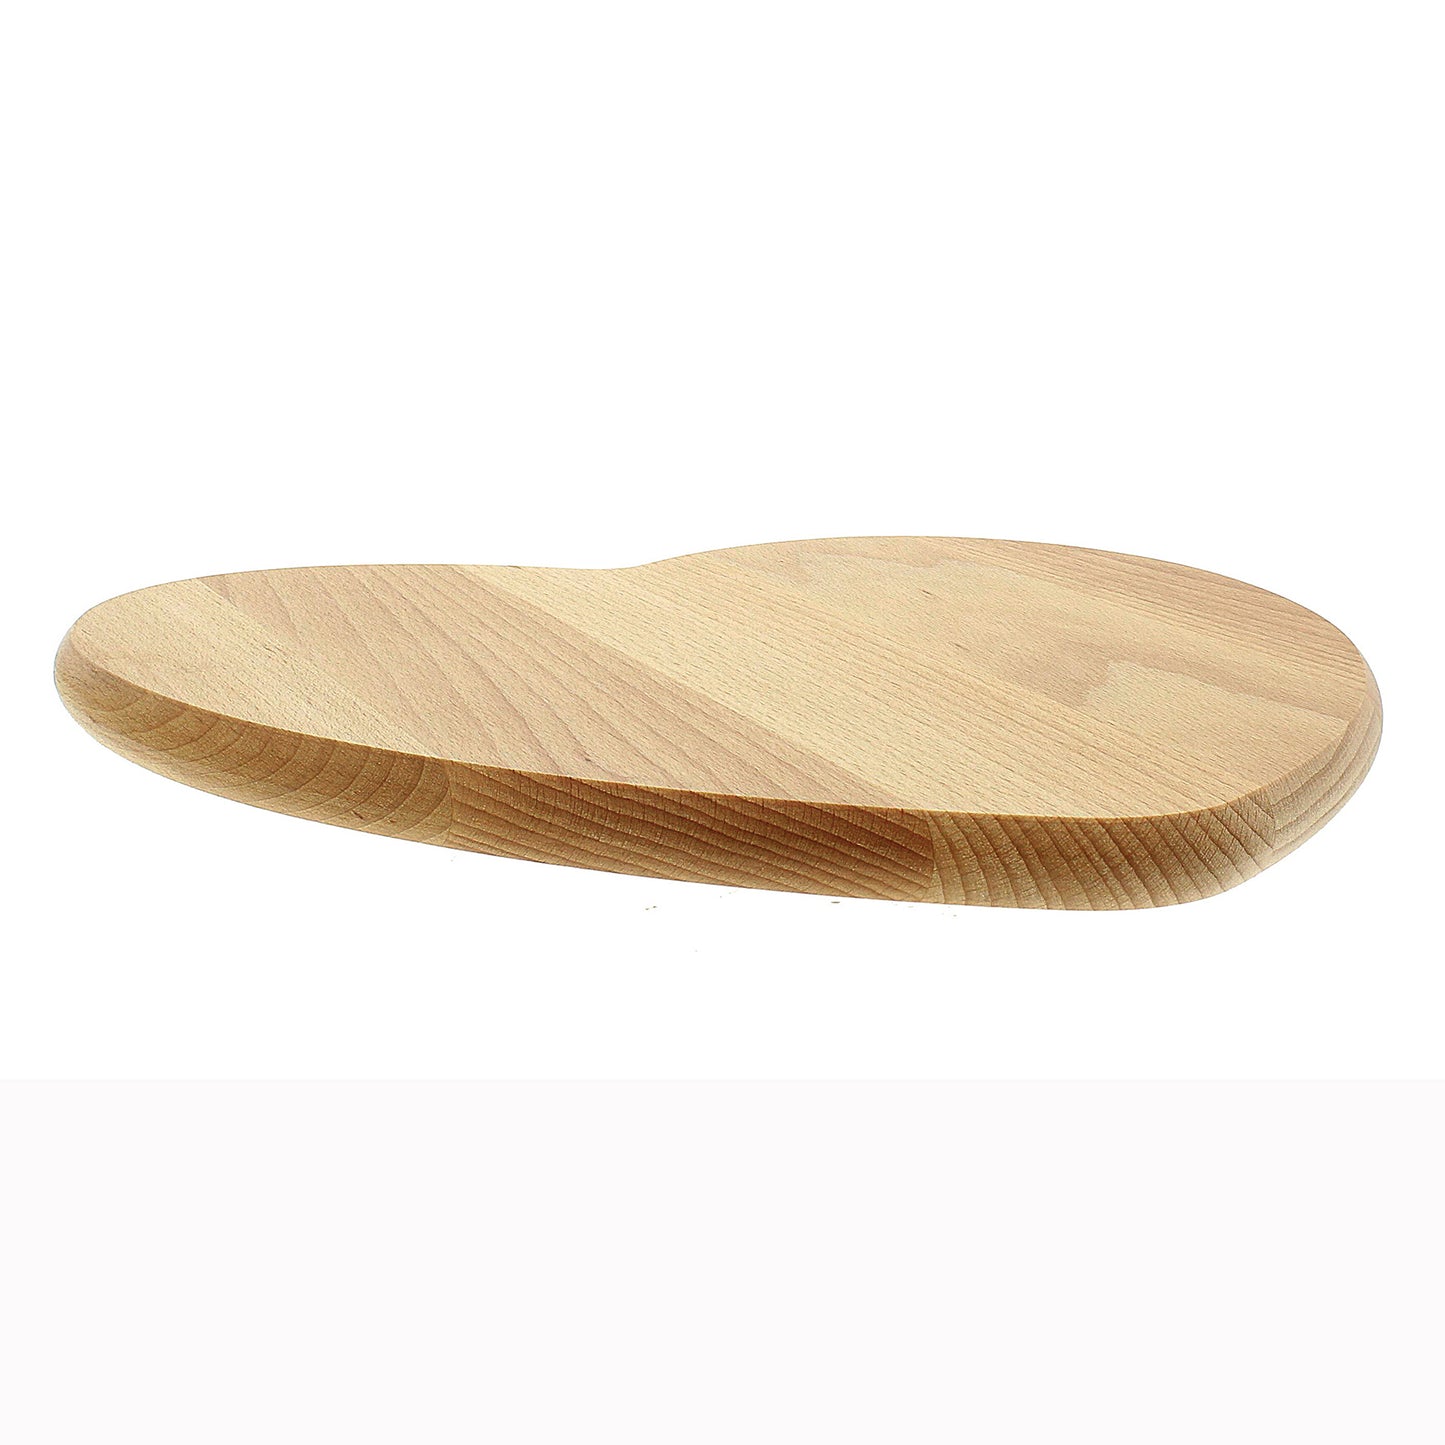 Heart Shaped Chopping Board | Wooden| Engraved Love Heart